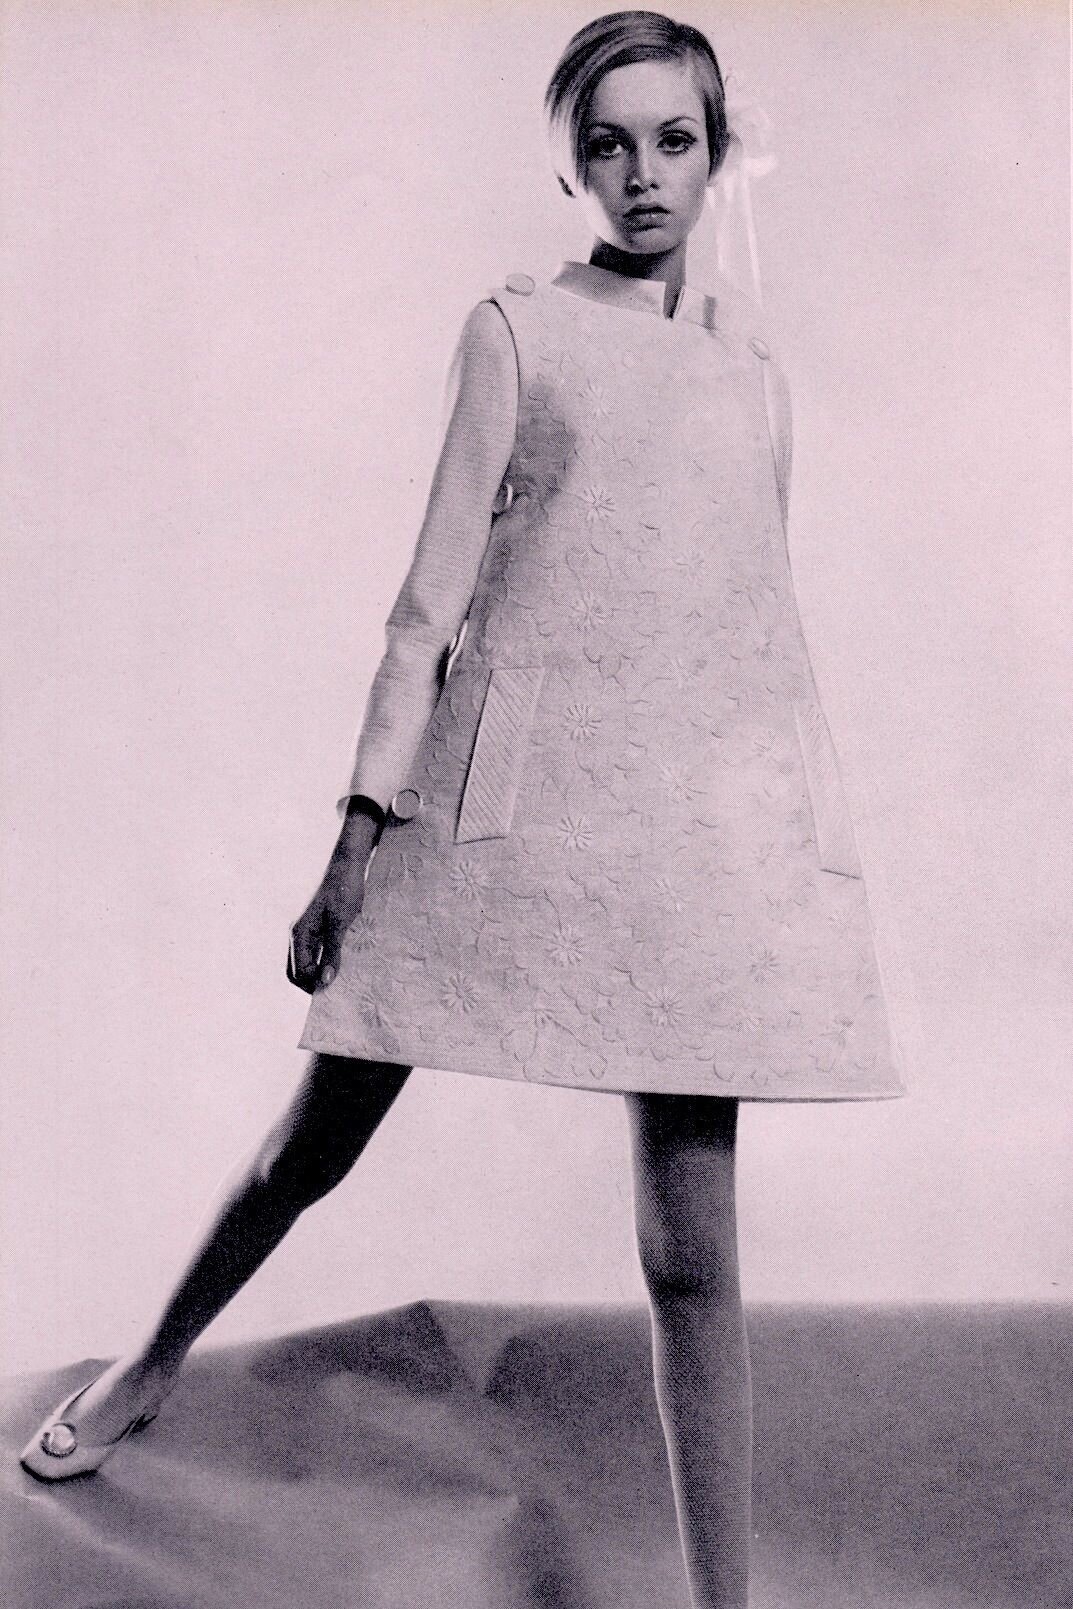 1960s Dress Styles, Swing, Shift, Mod, Mini Dresses